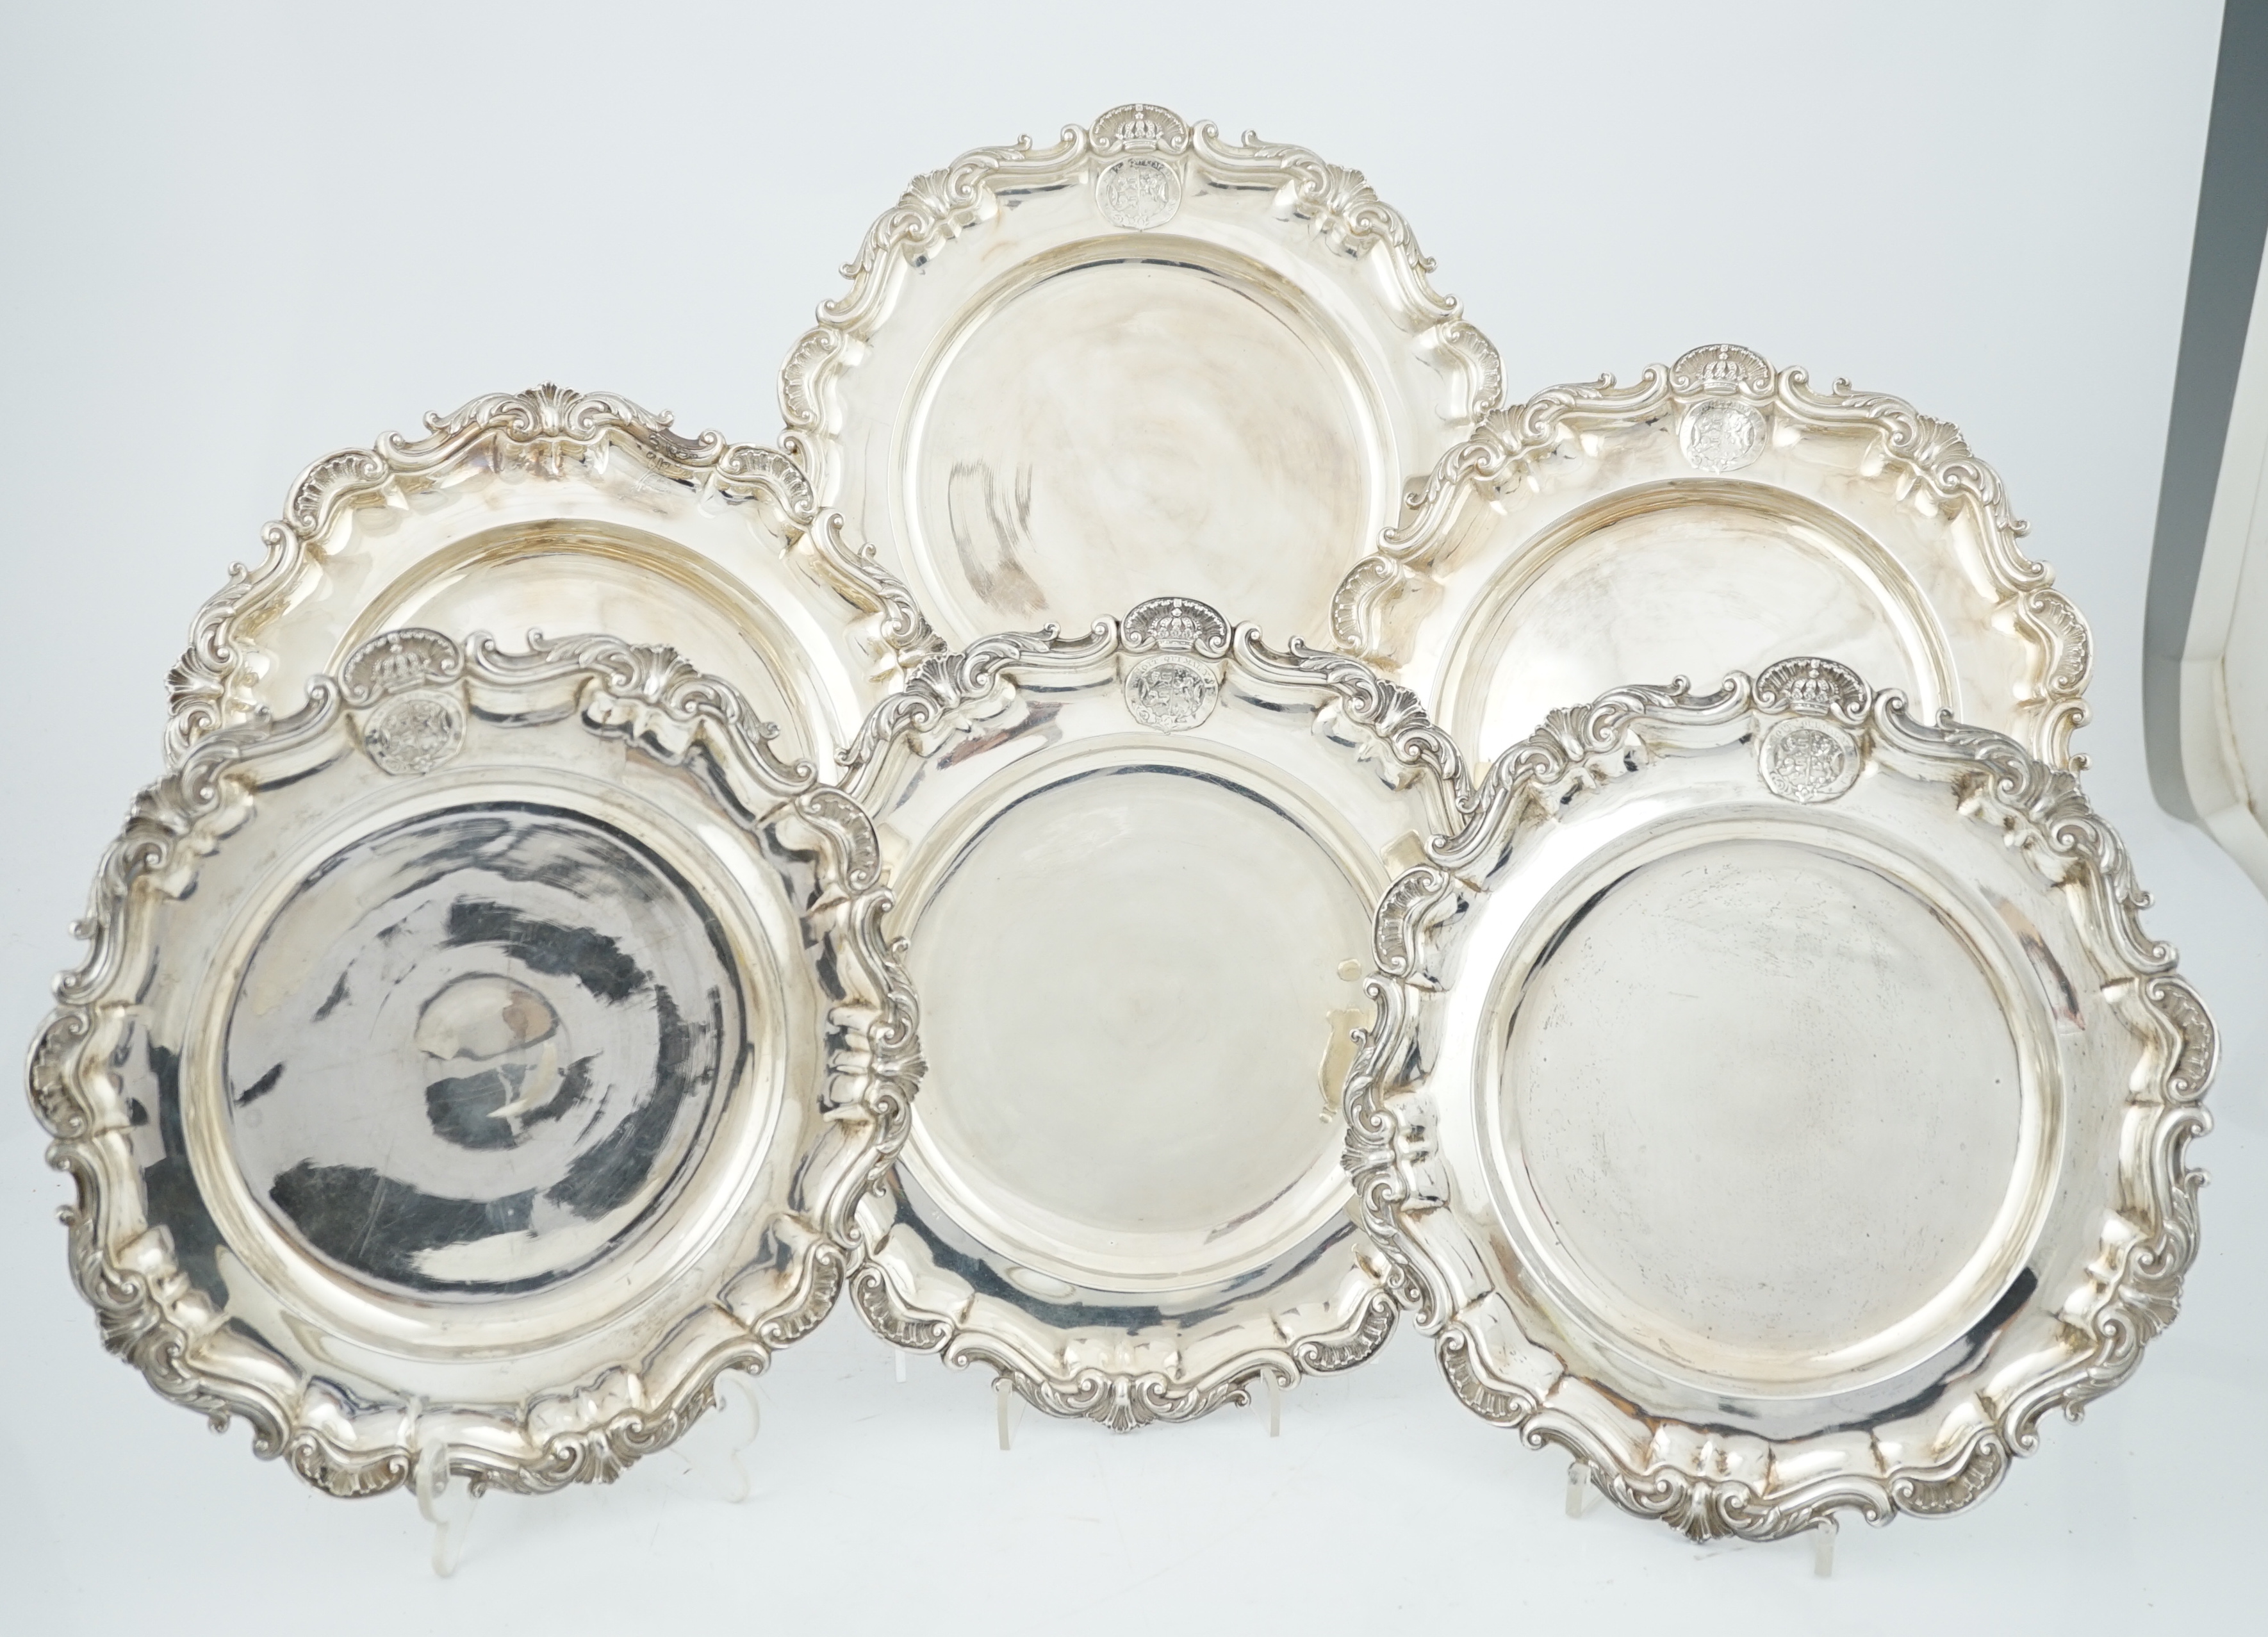 Duke of Brunswick Service: A set of six early Victorian silver dinner plates by John Mortimer & John Samuel Hunt